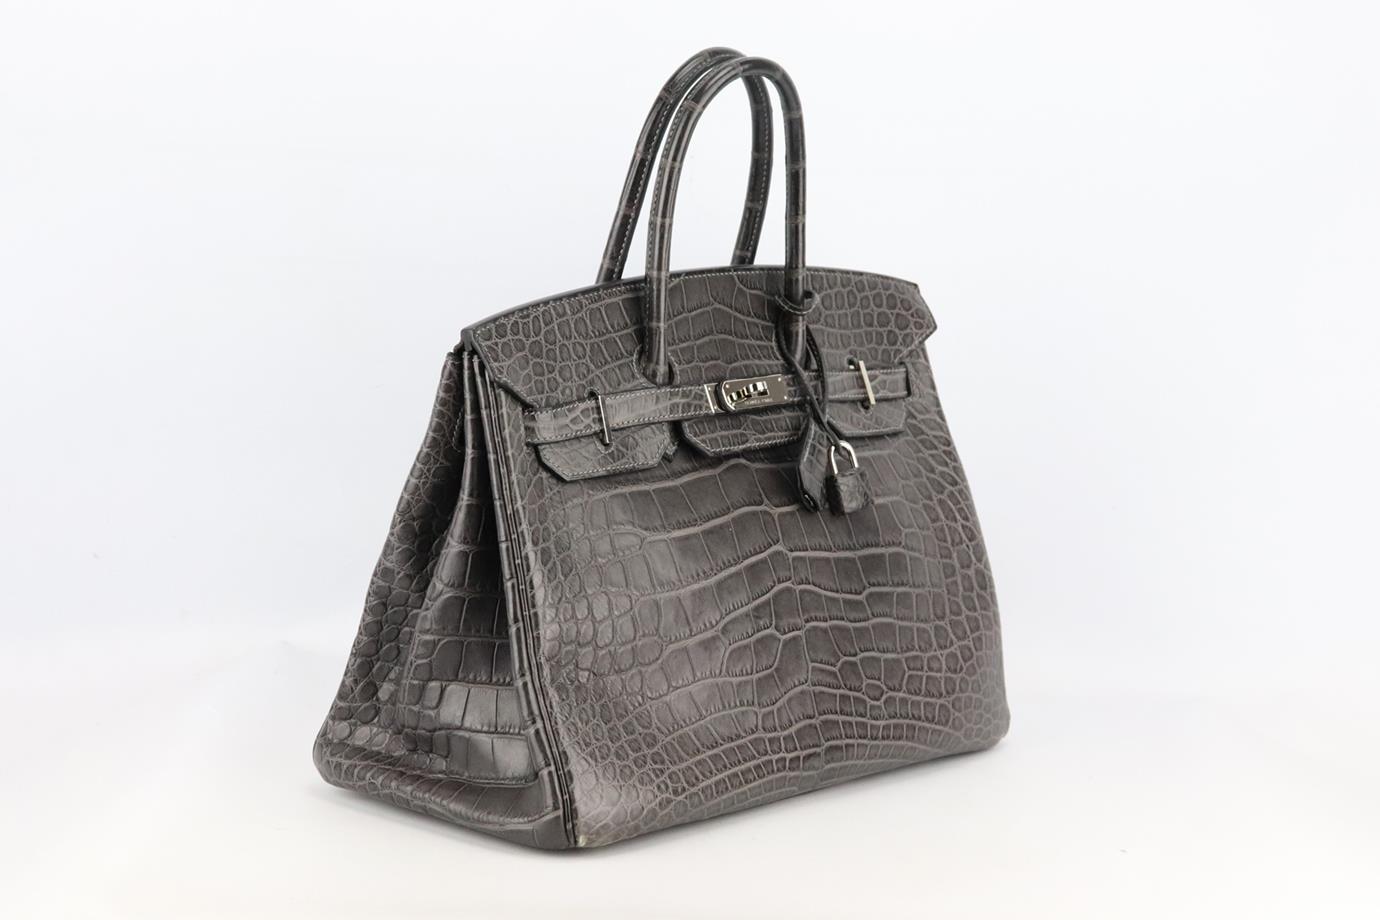 Hermès 2010 Birkin 35cm Matte Alligator Mississippiensis Leather Bag For Sale 1